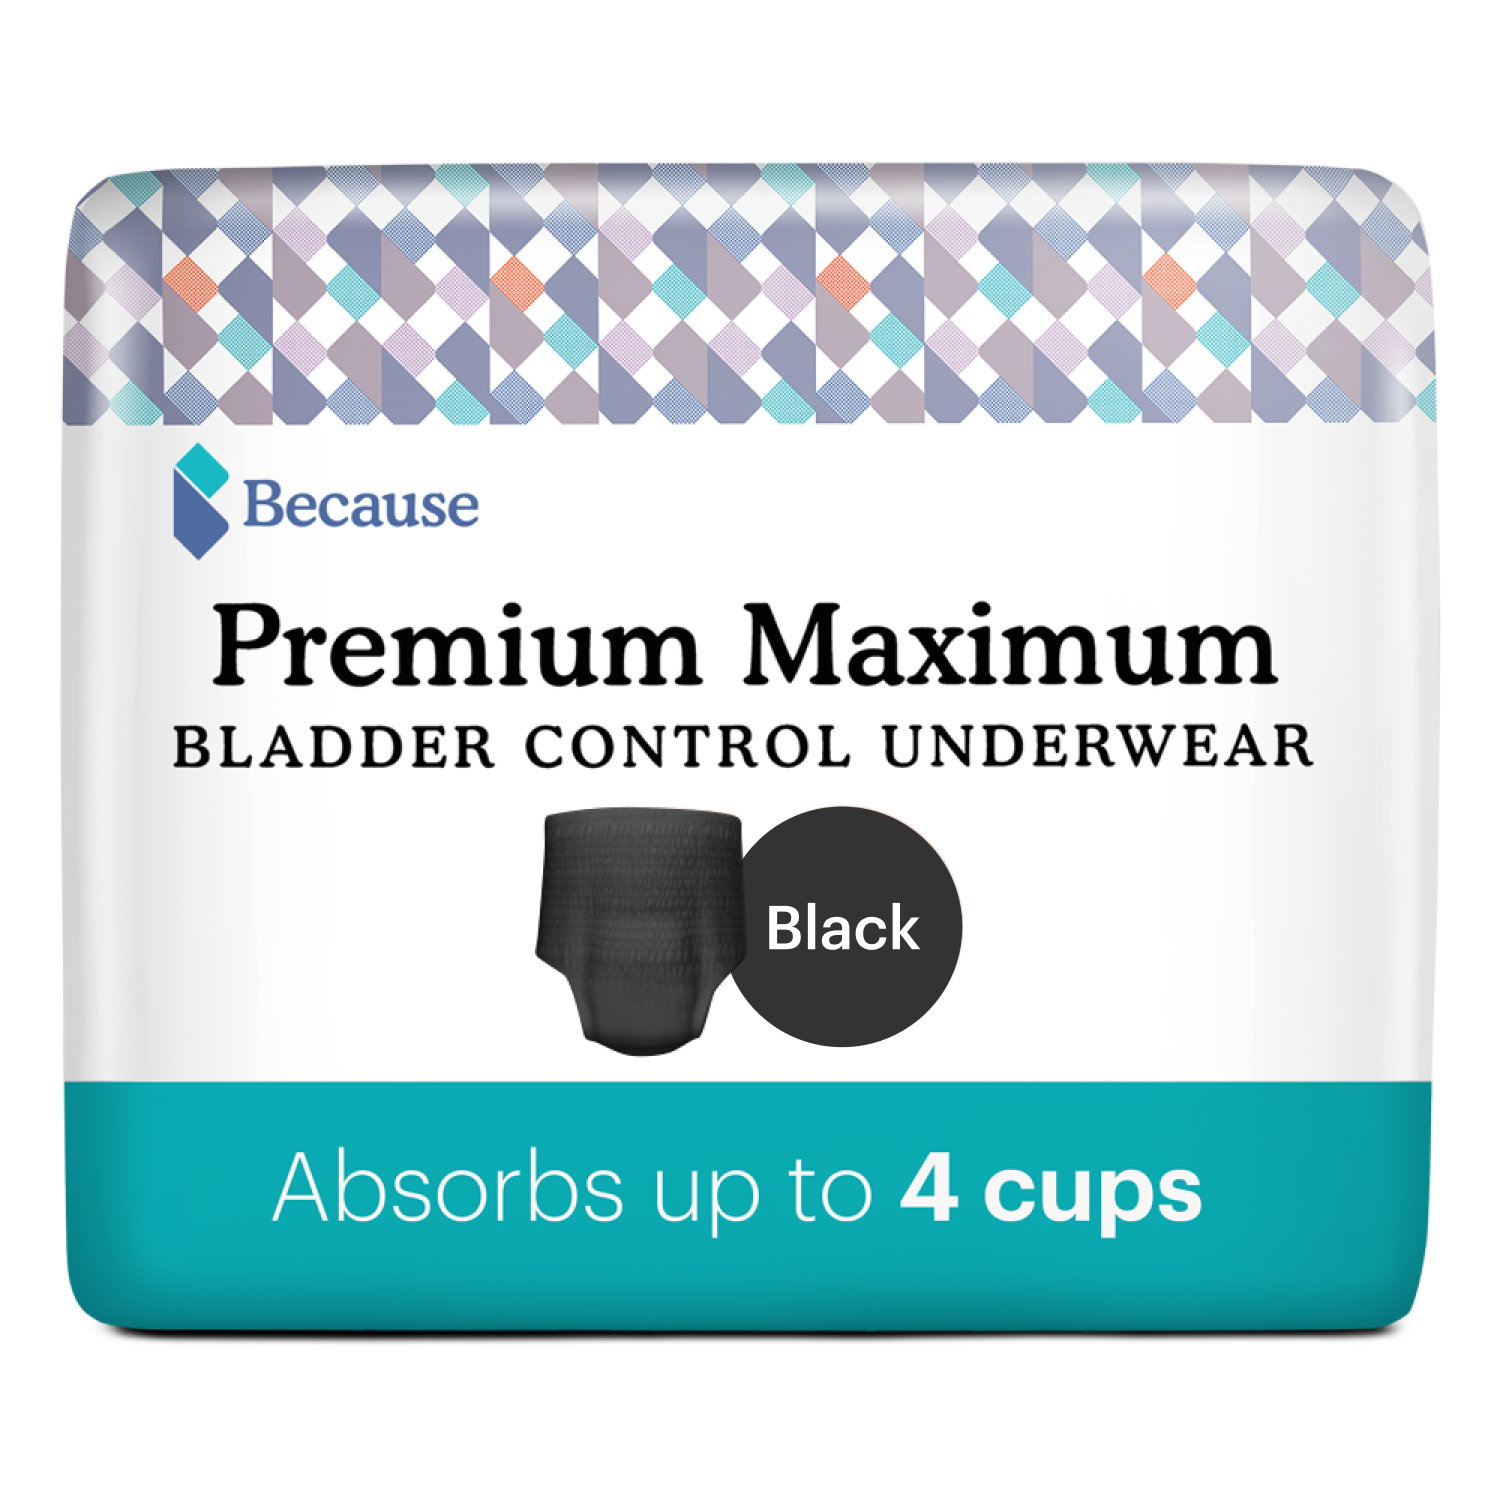 Premium Maximum Black Incontinence Underwear for Women - Because